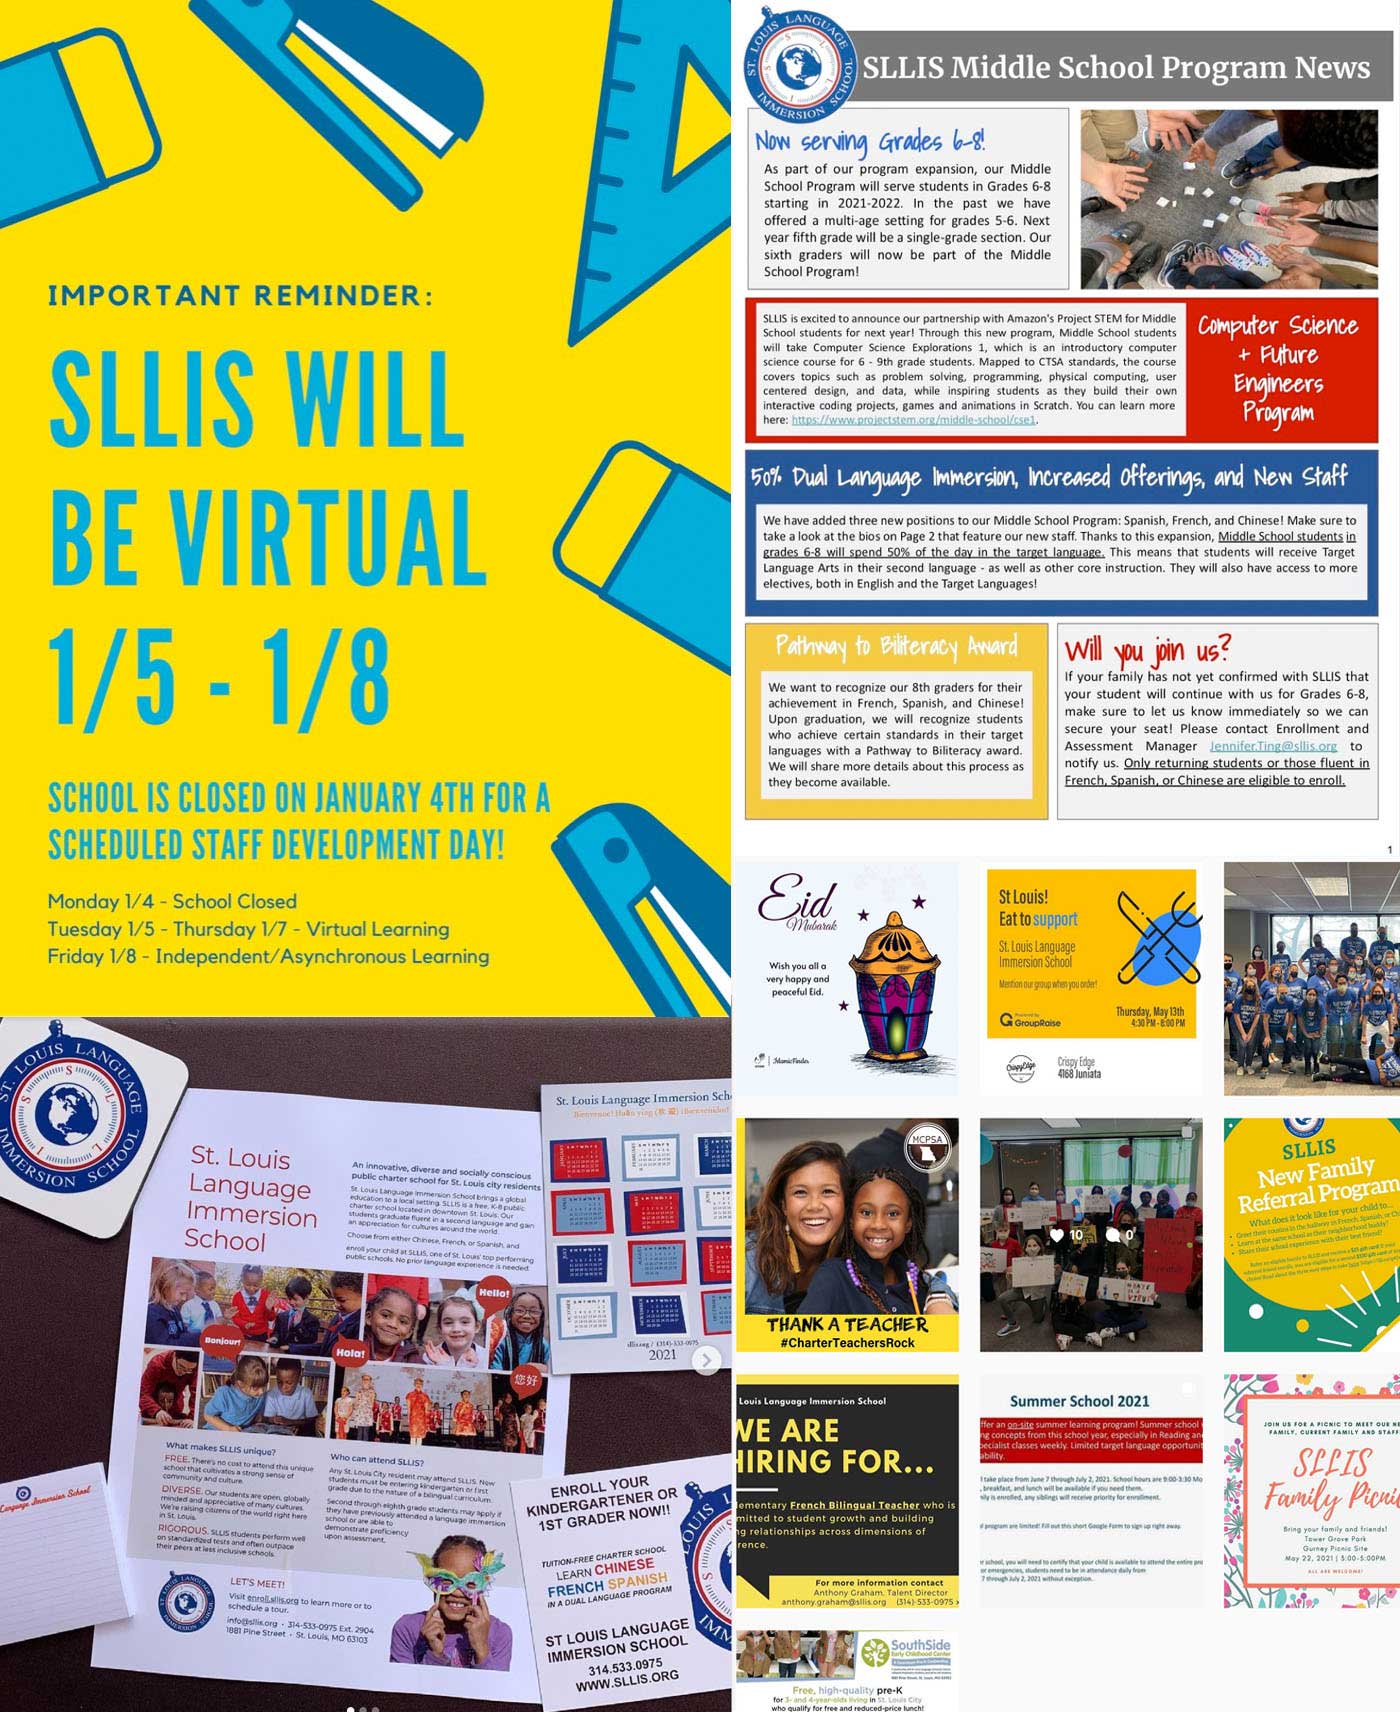 SLLIS' old branding and marketing